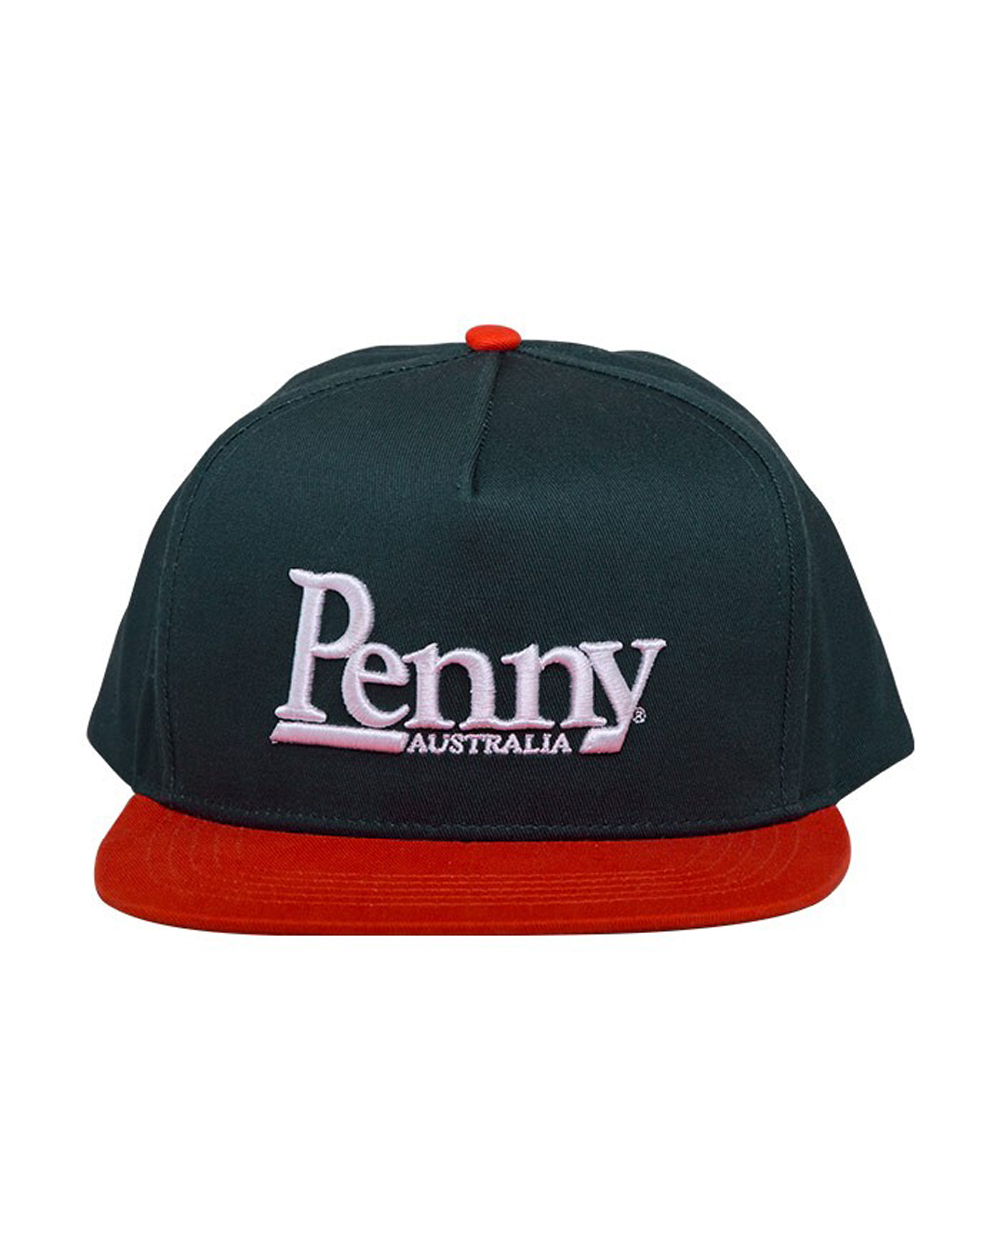 Penny Logo Gorra de Béisbol Snapback para Hombre Dark Green/Orange